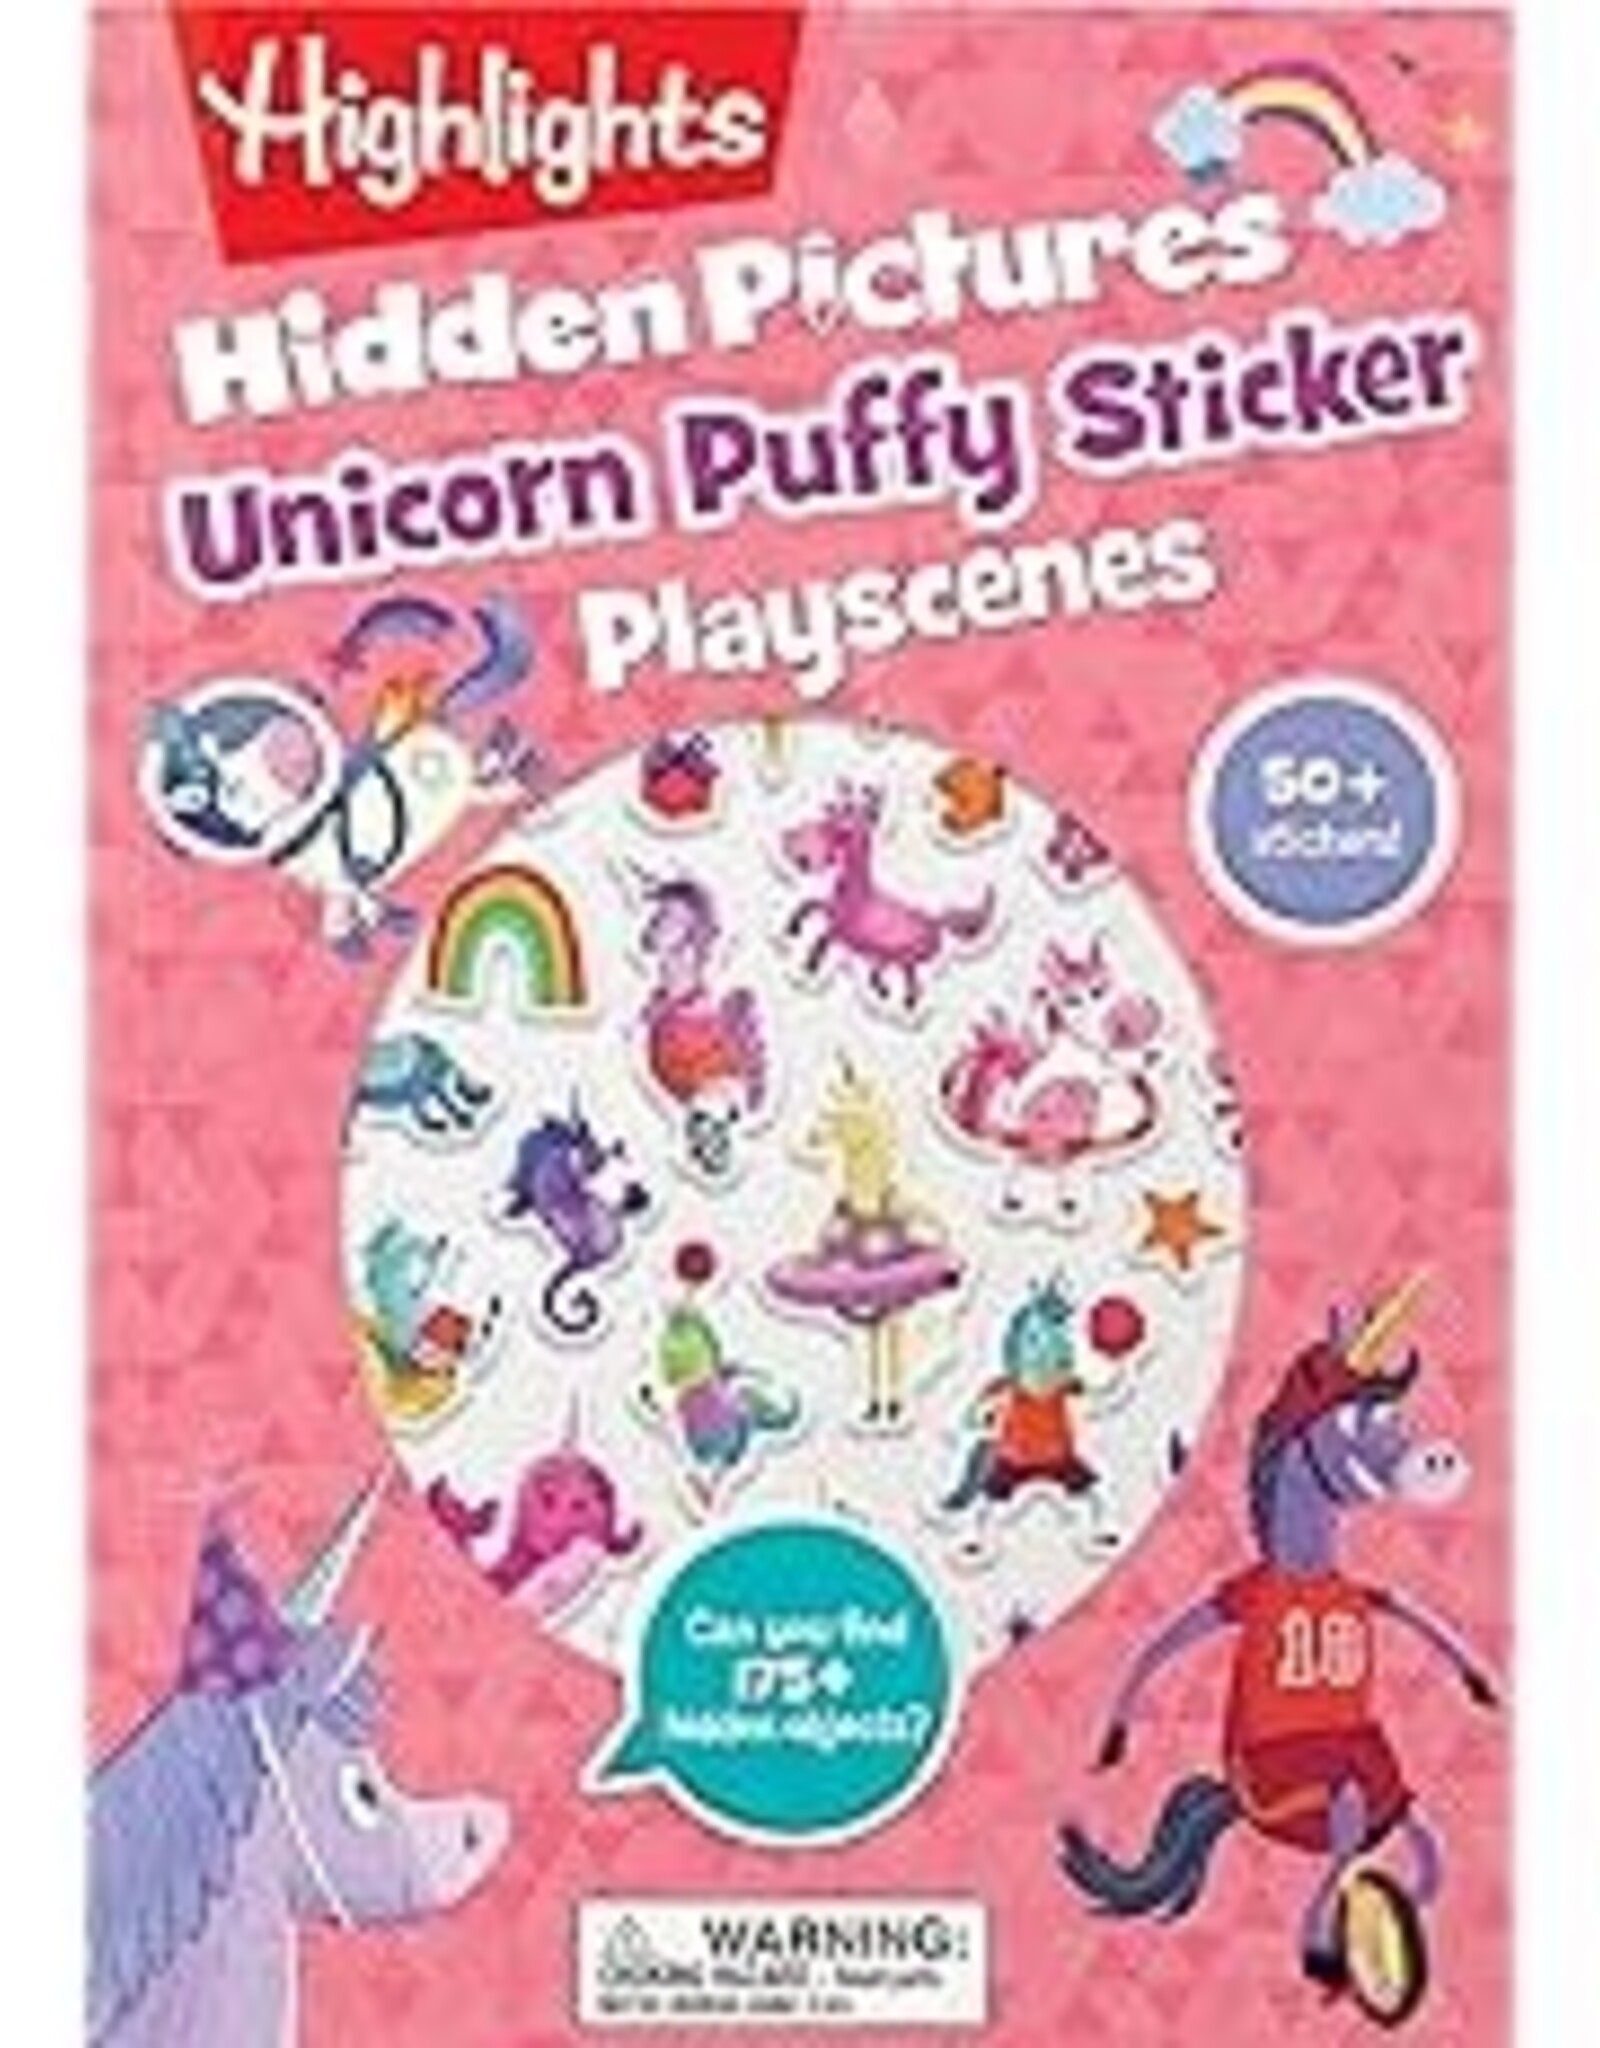 Penguin Random House Highlights Hidden Picture Unicorn Puffy Sticker Playscene